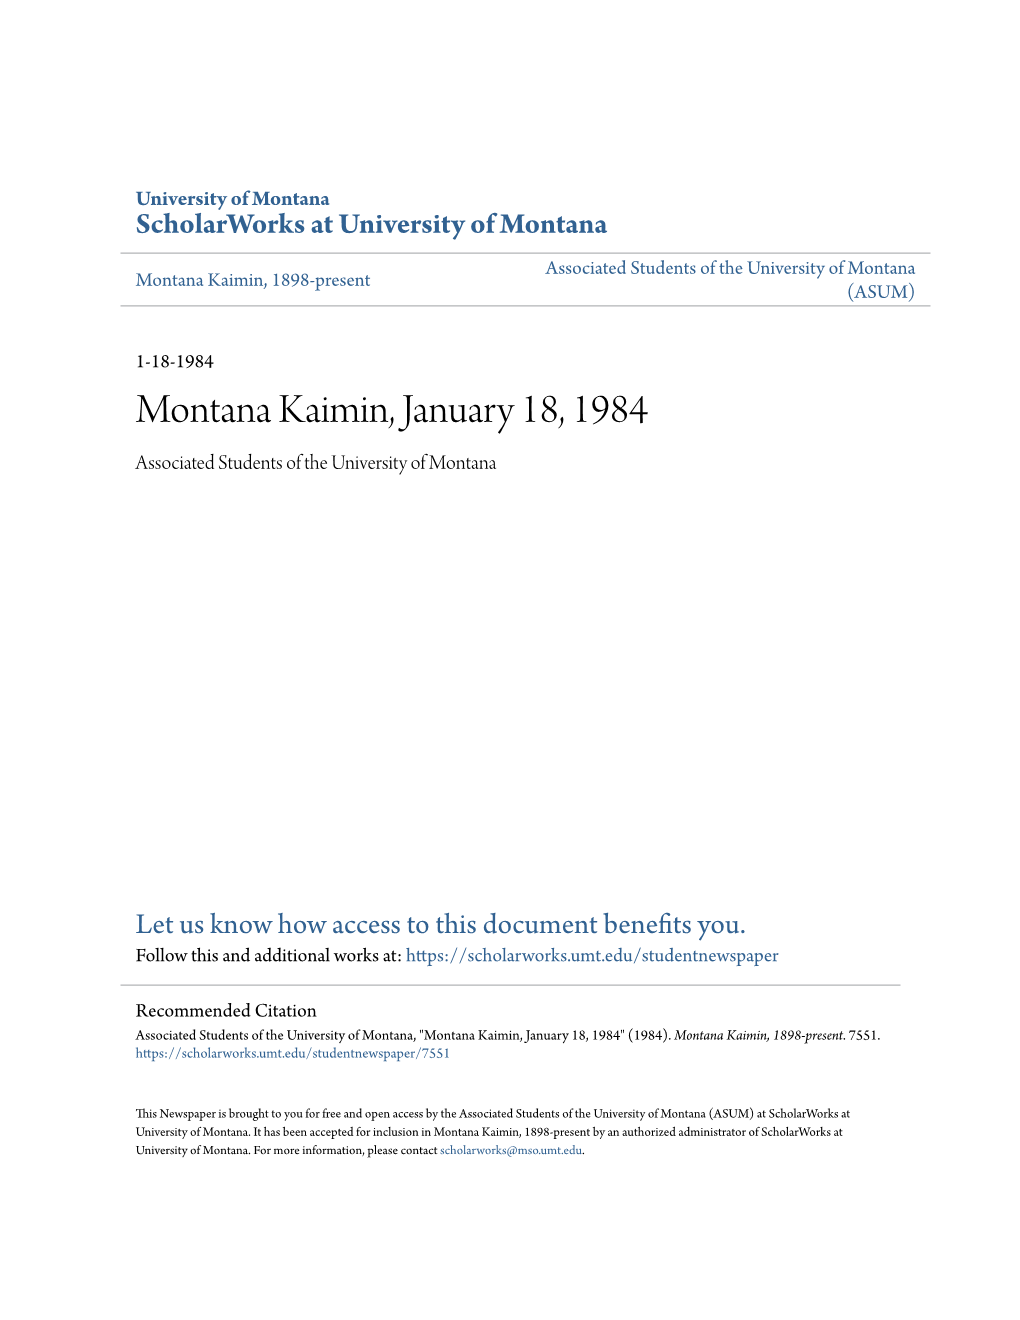 Montana Kaimin, January 18, 1984 Associated Students of the University of Montana